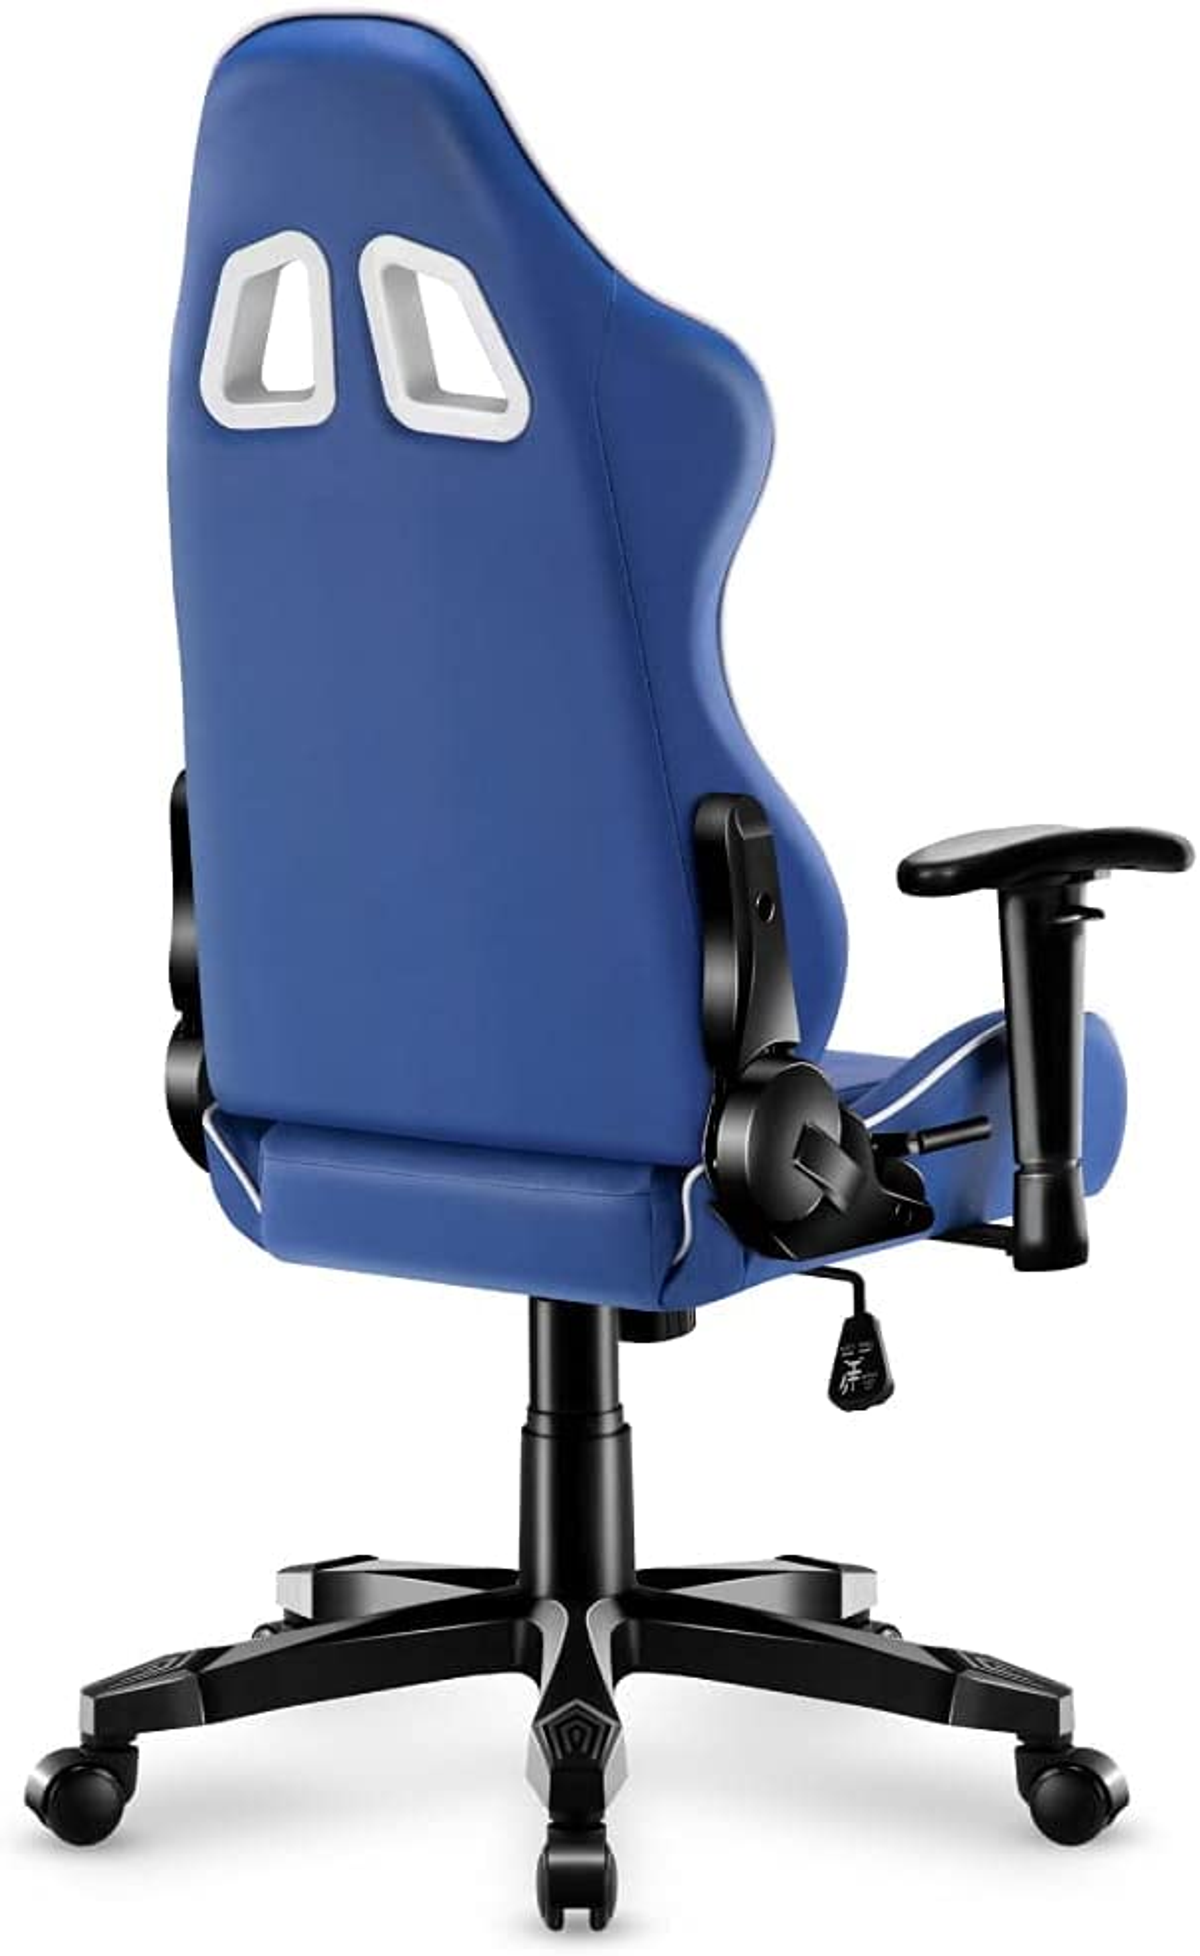 6.0 Stuhl, Ranger Design Ergonomisches Gaming Lendenkissen Nackenkissen HUZARO Blau